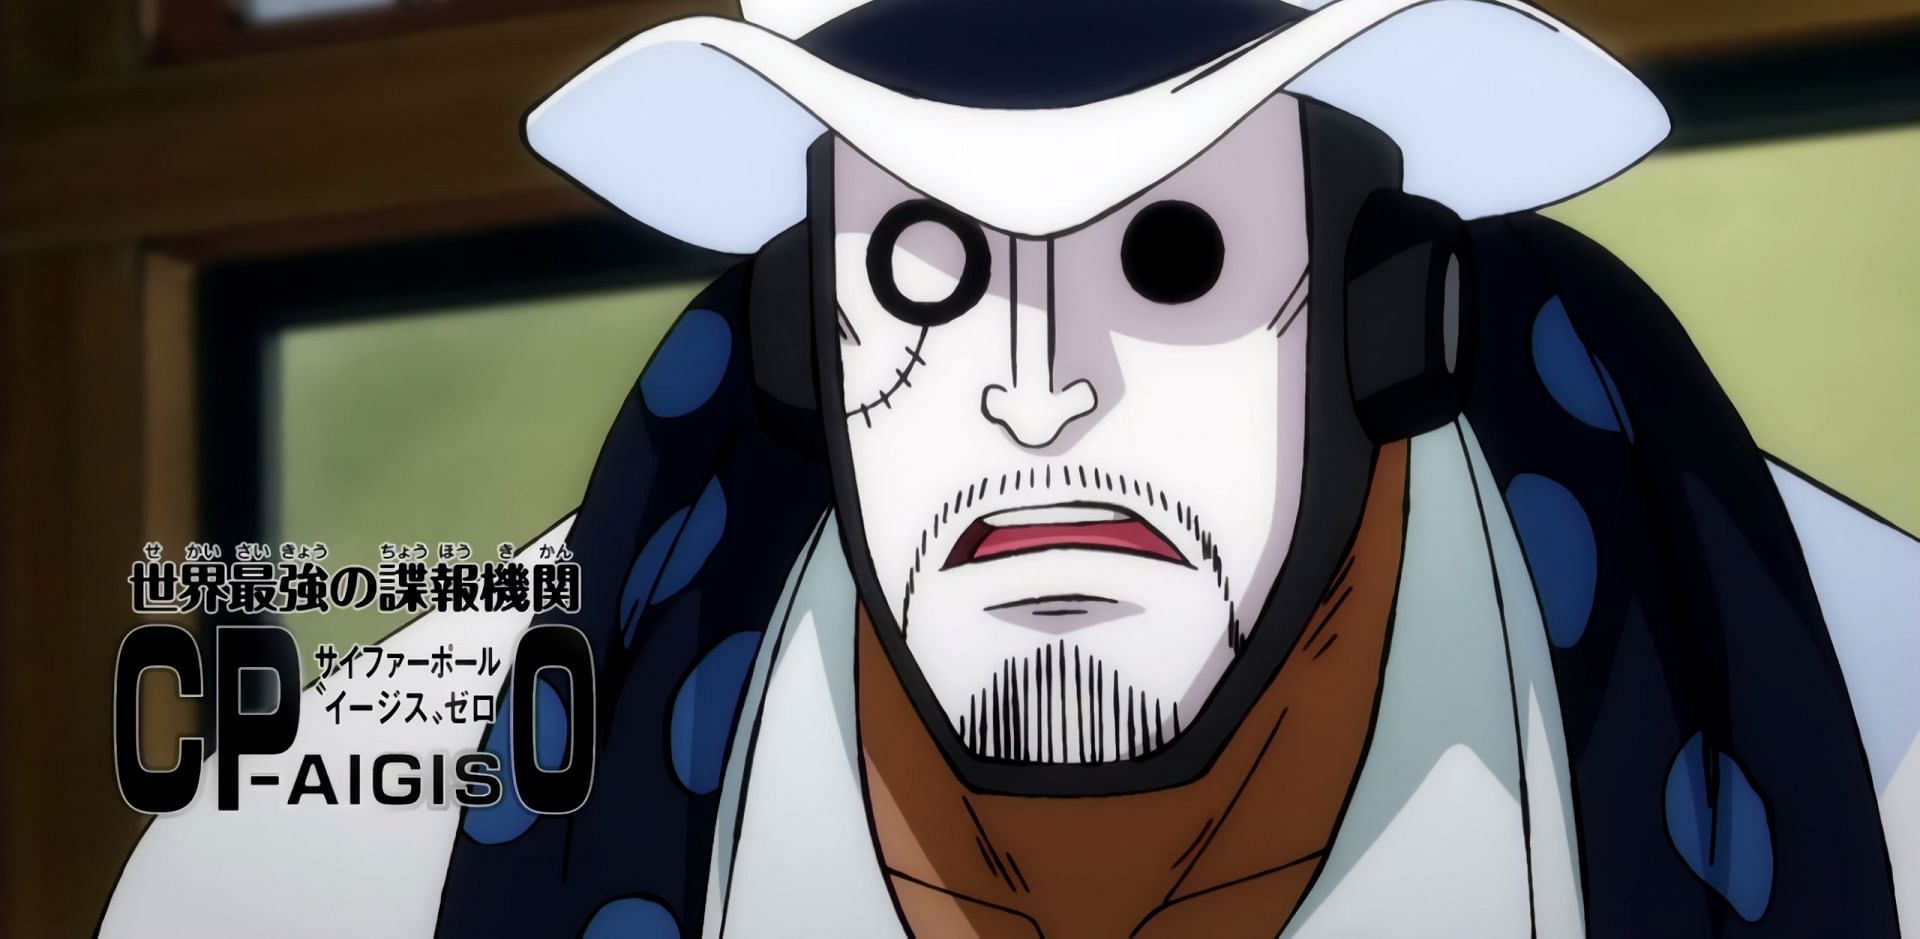 One Piece episode 1037: Momonosuke's determination, Nami's new